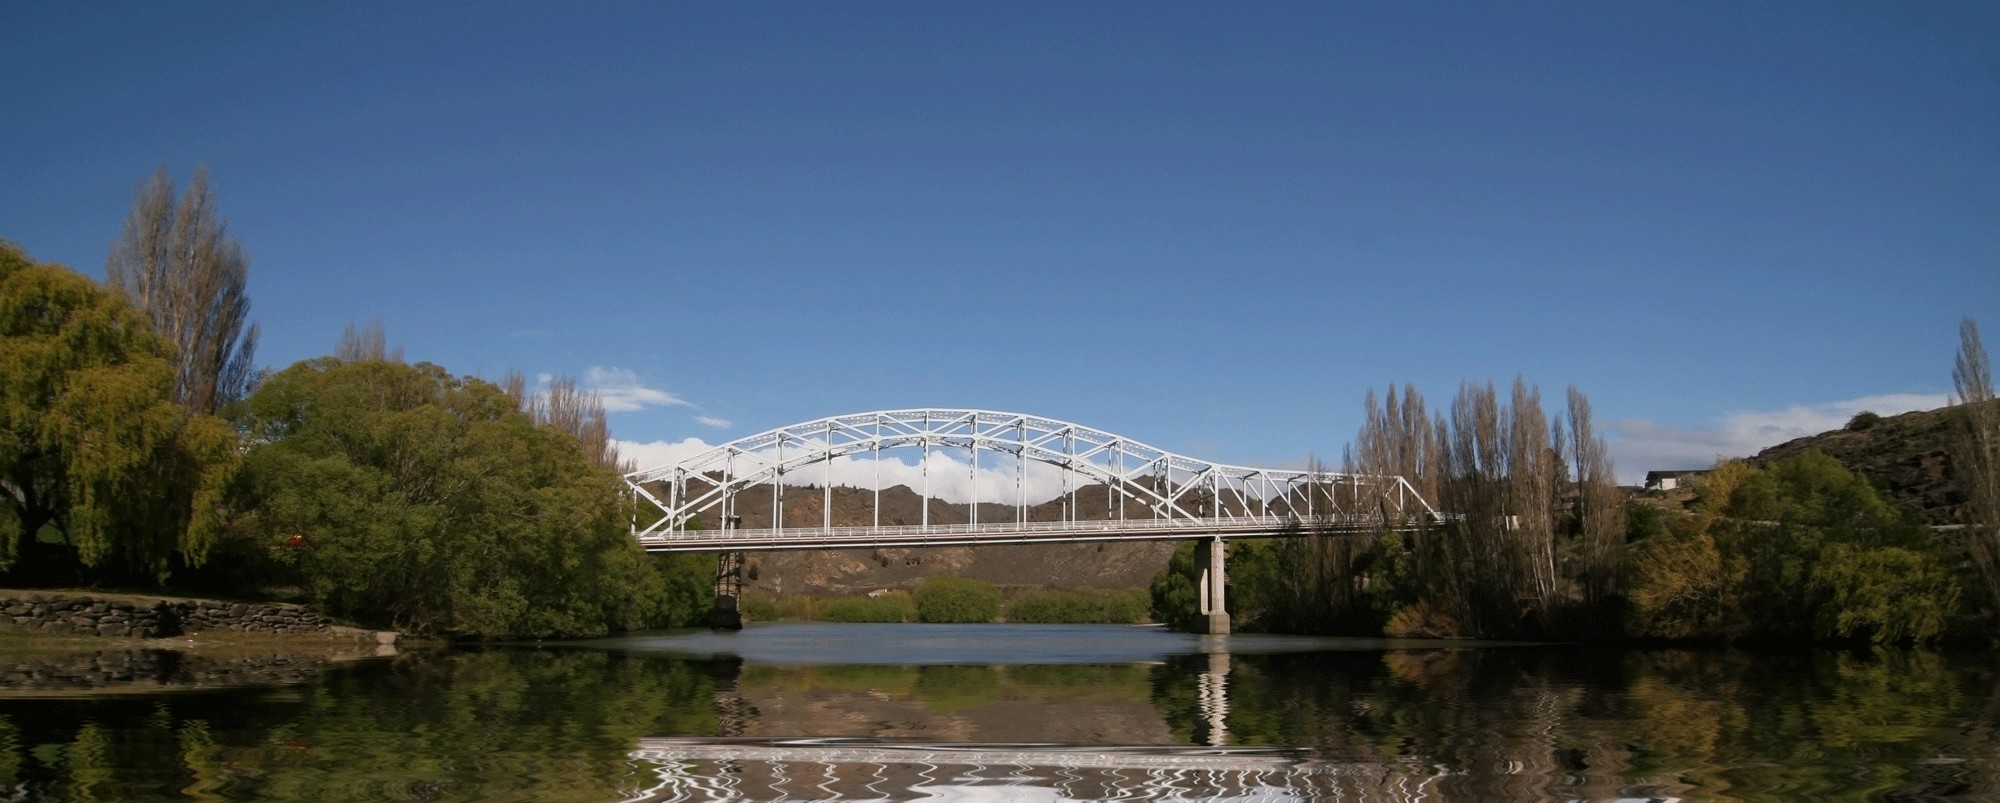 image the the Alexandra bridge Central Otago